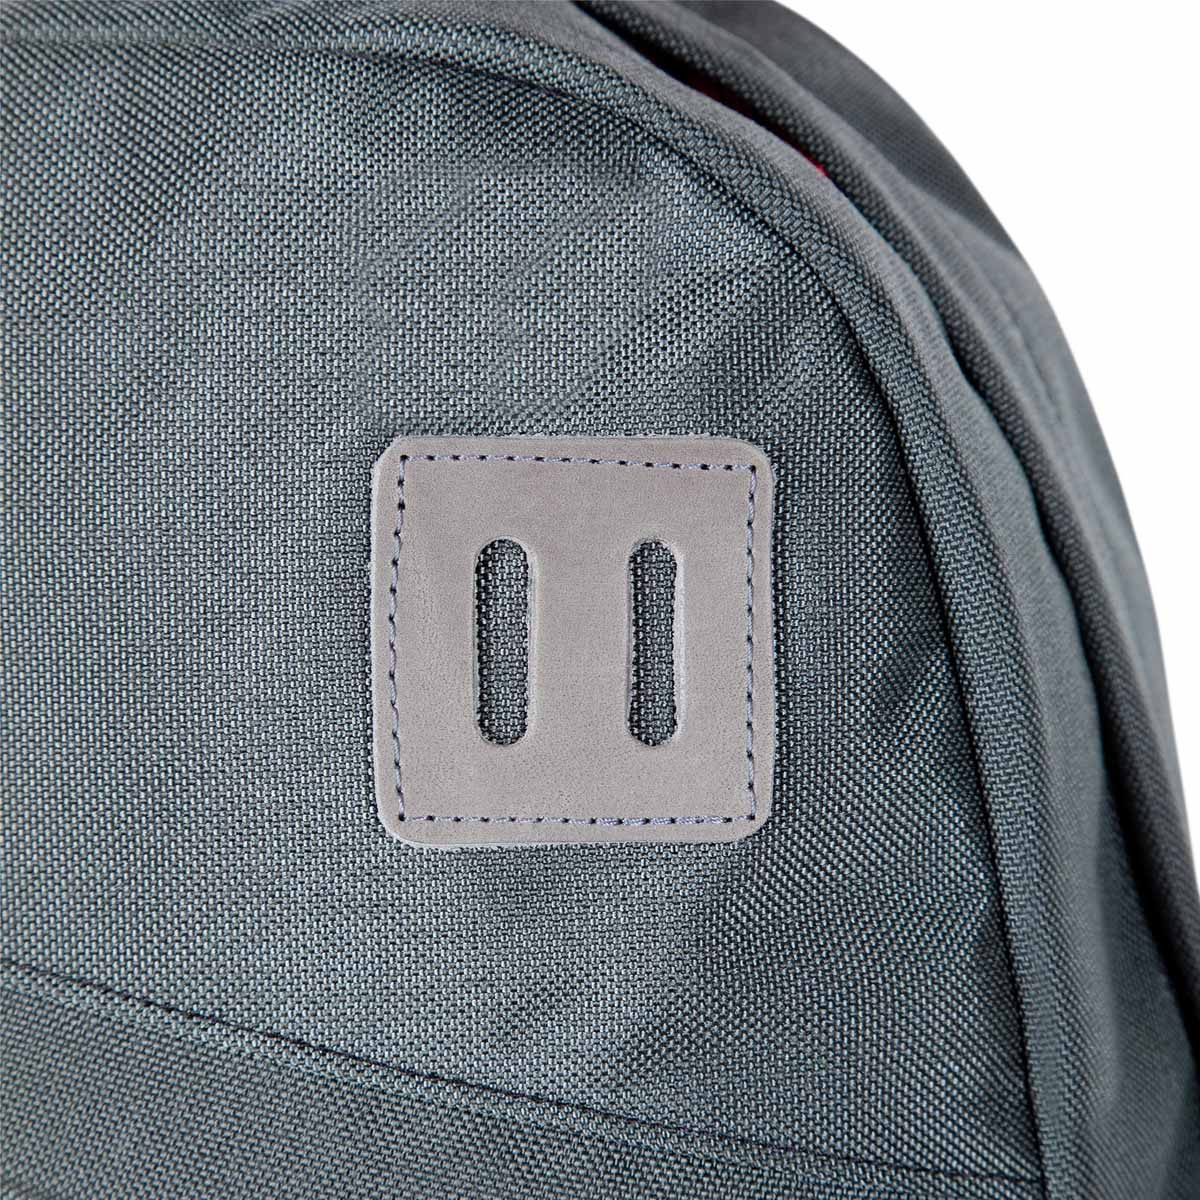 Topo Designs Daypack Navy/Brown Leather, idealer Reisebegleiter, Arbeitskollege oder Packesel